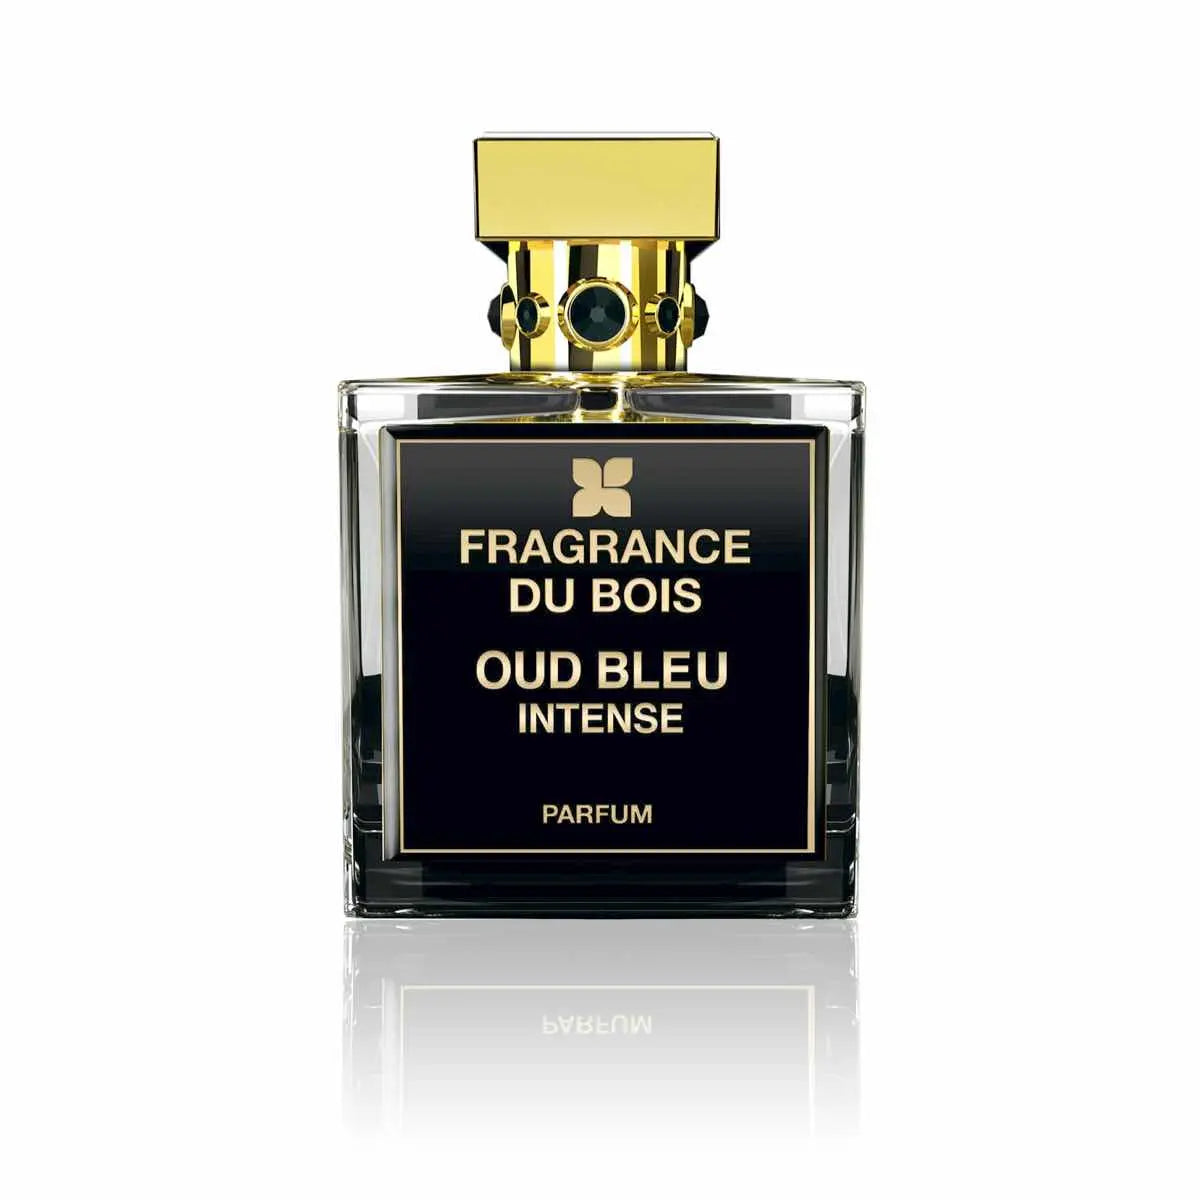 Fragrance du bois Oud Bleu Perfume intenso - 100 ml